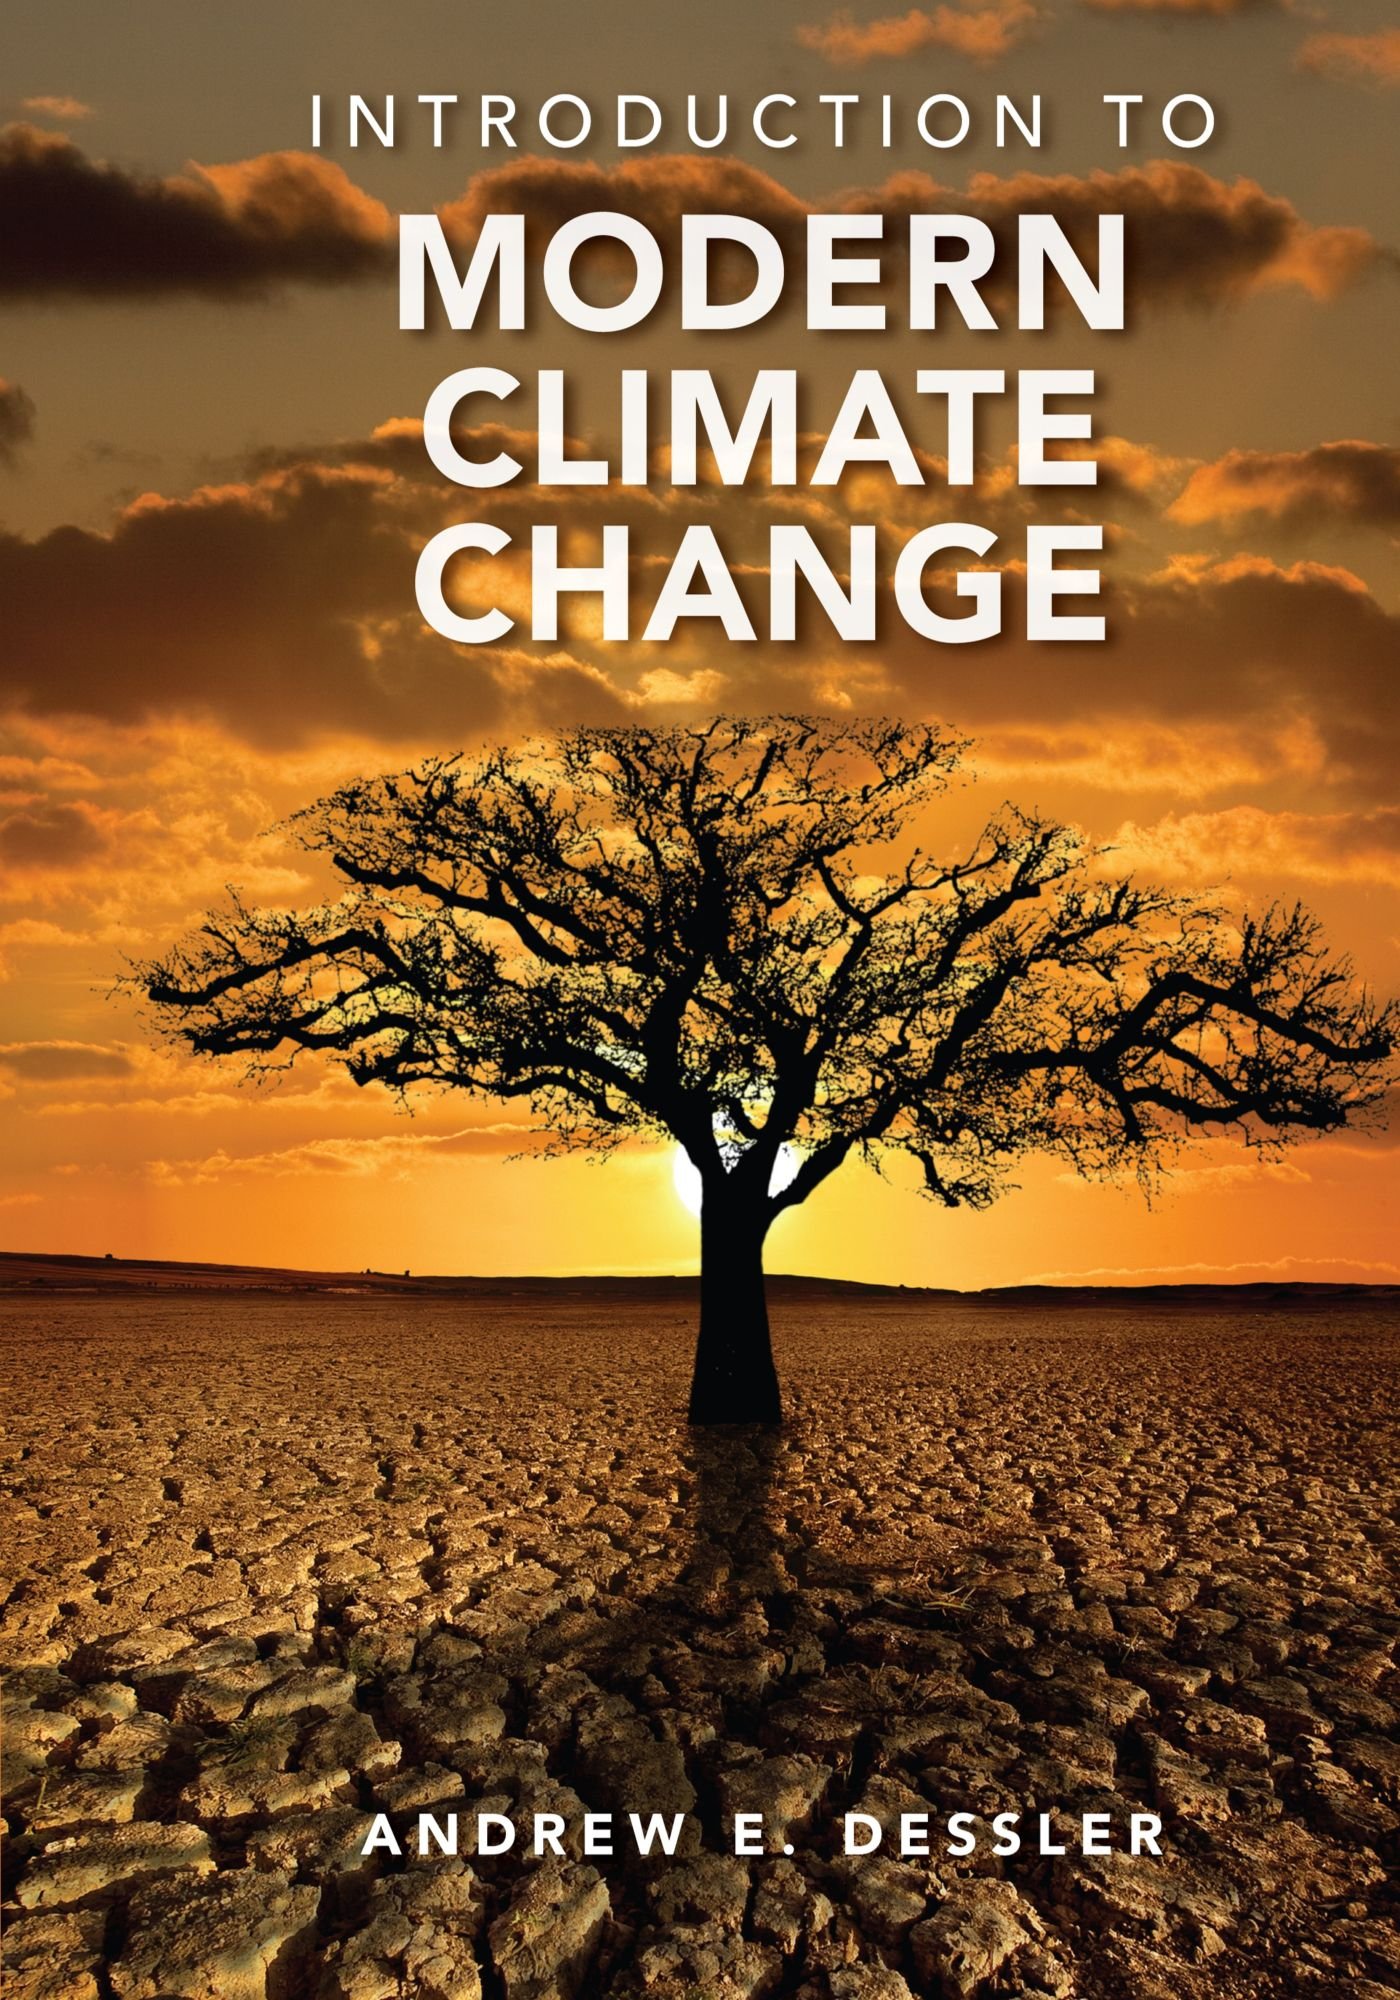 introduction-to-modern-climate-change-author-andrew-dessler-publisher-cambridge-university-press-1st-edition-10-october-20112022-03-01-033749.jpg